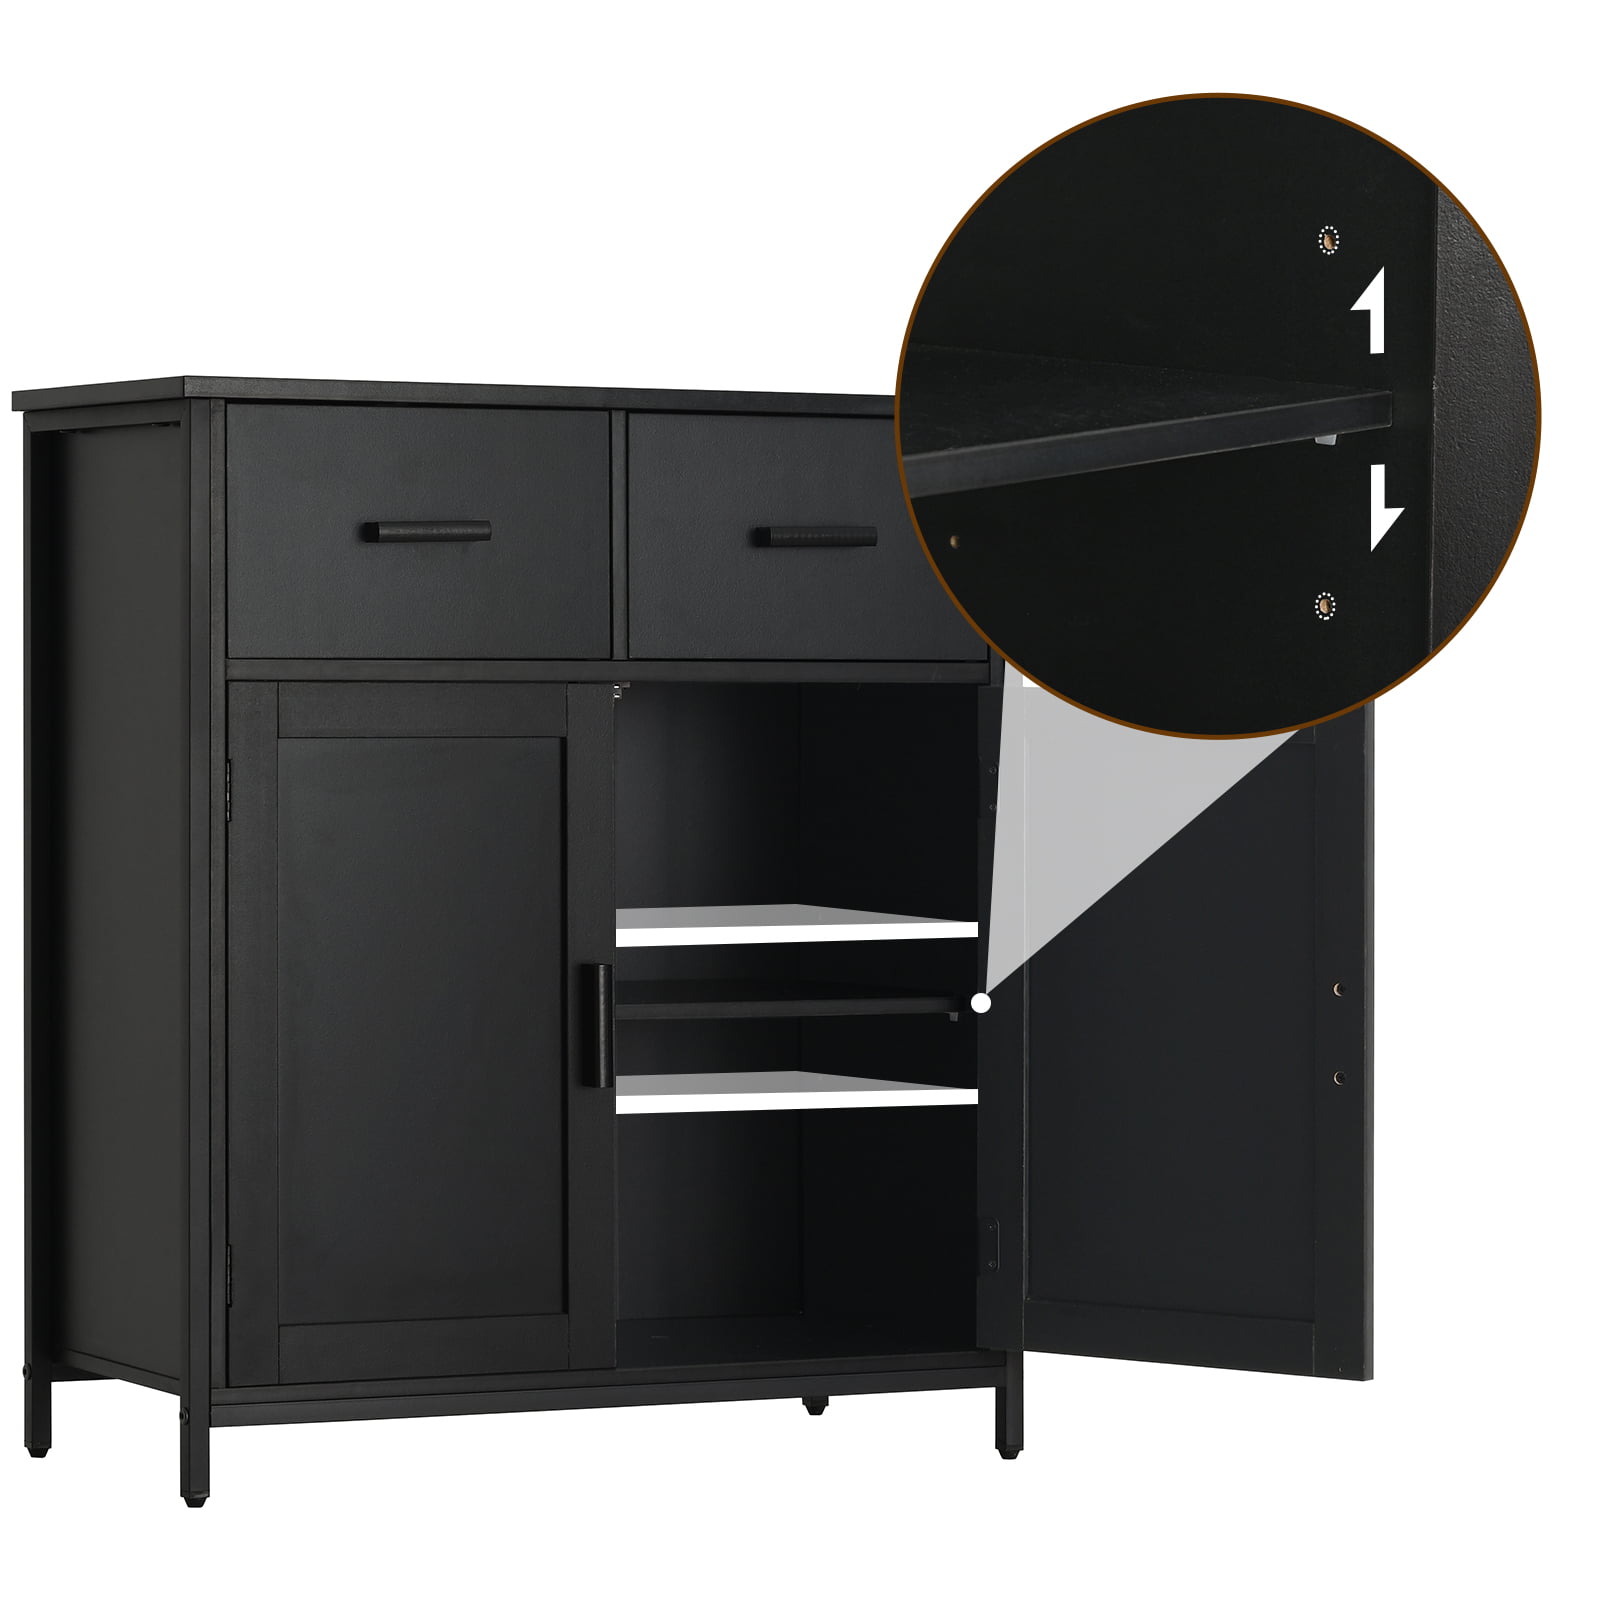 Sideboard, Storage Room with Two Doors, Kitchen Cabinet, Cupboard,  Industrial Design, Steel Frame, Vintage Brown Black - AliExpress